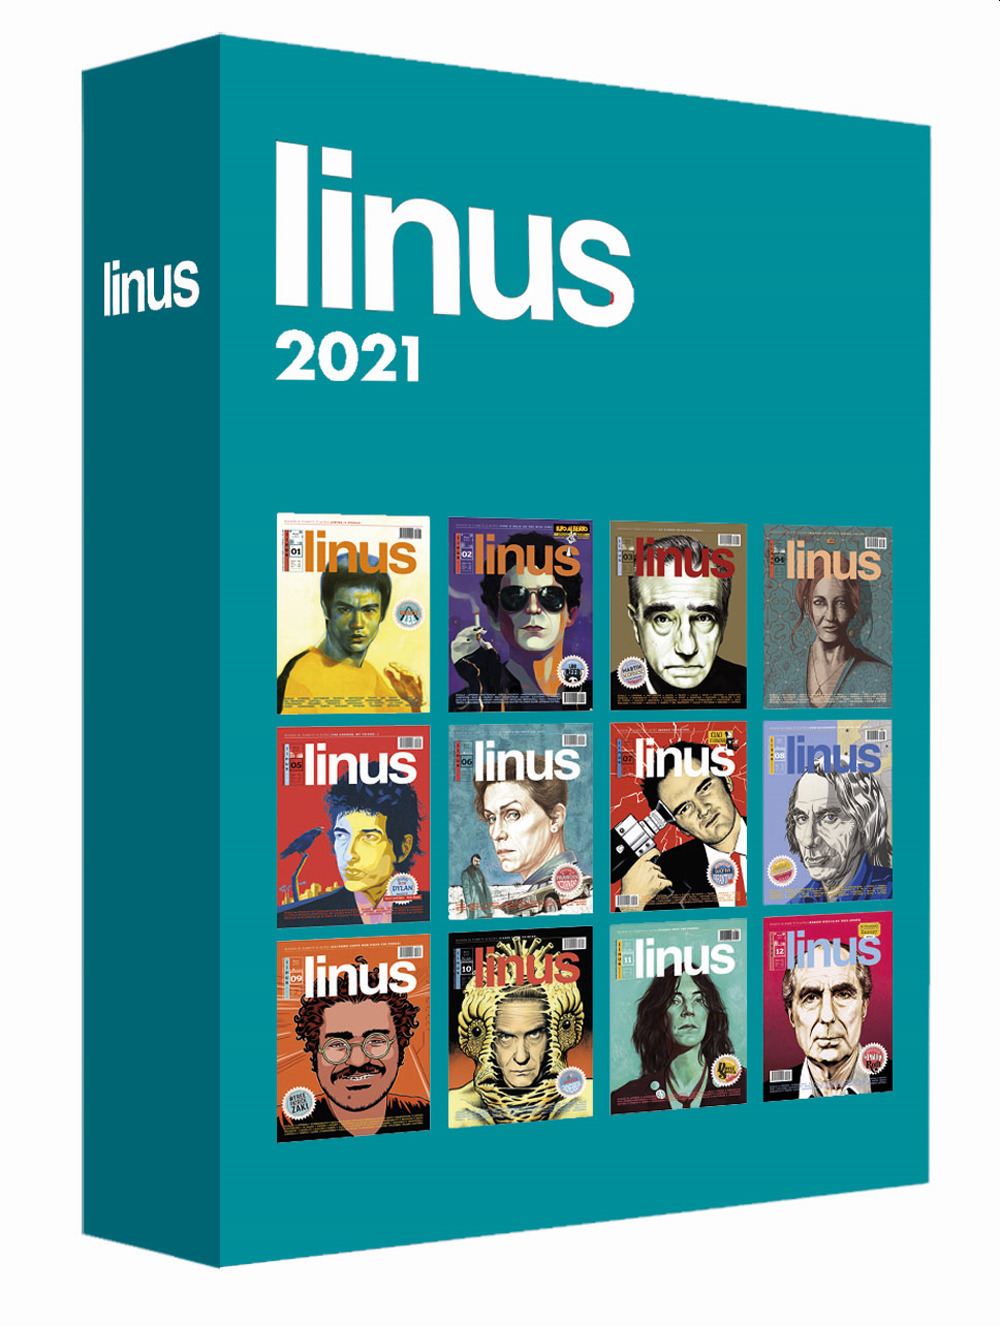 Linus cofanetto 2021